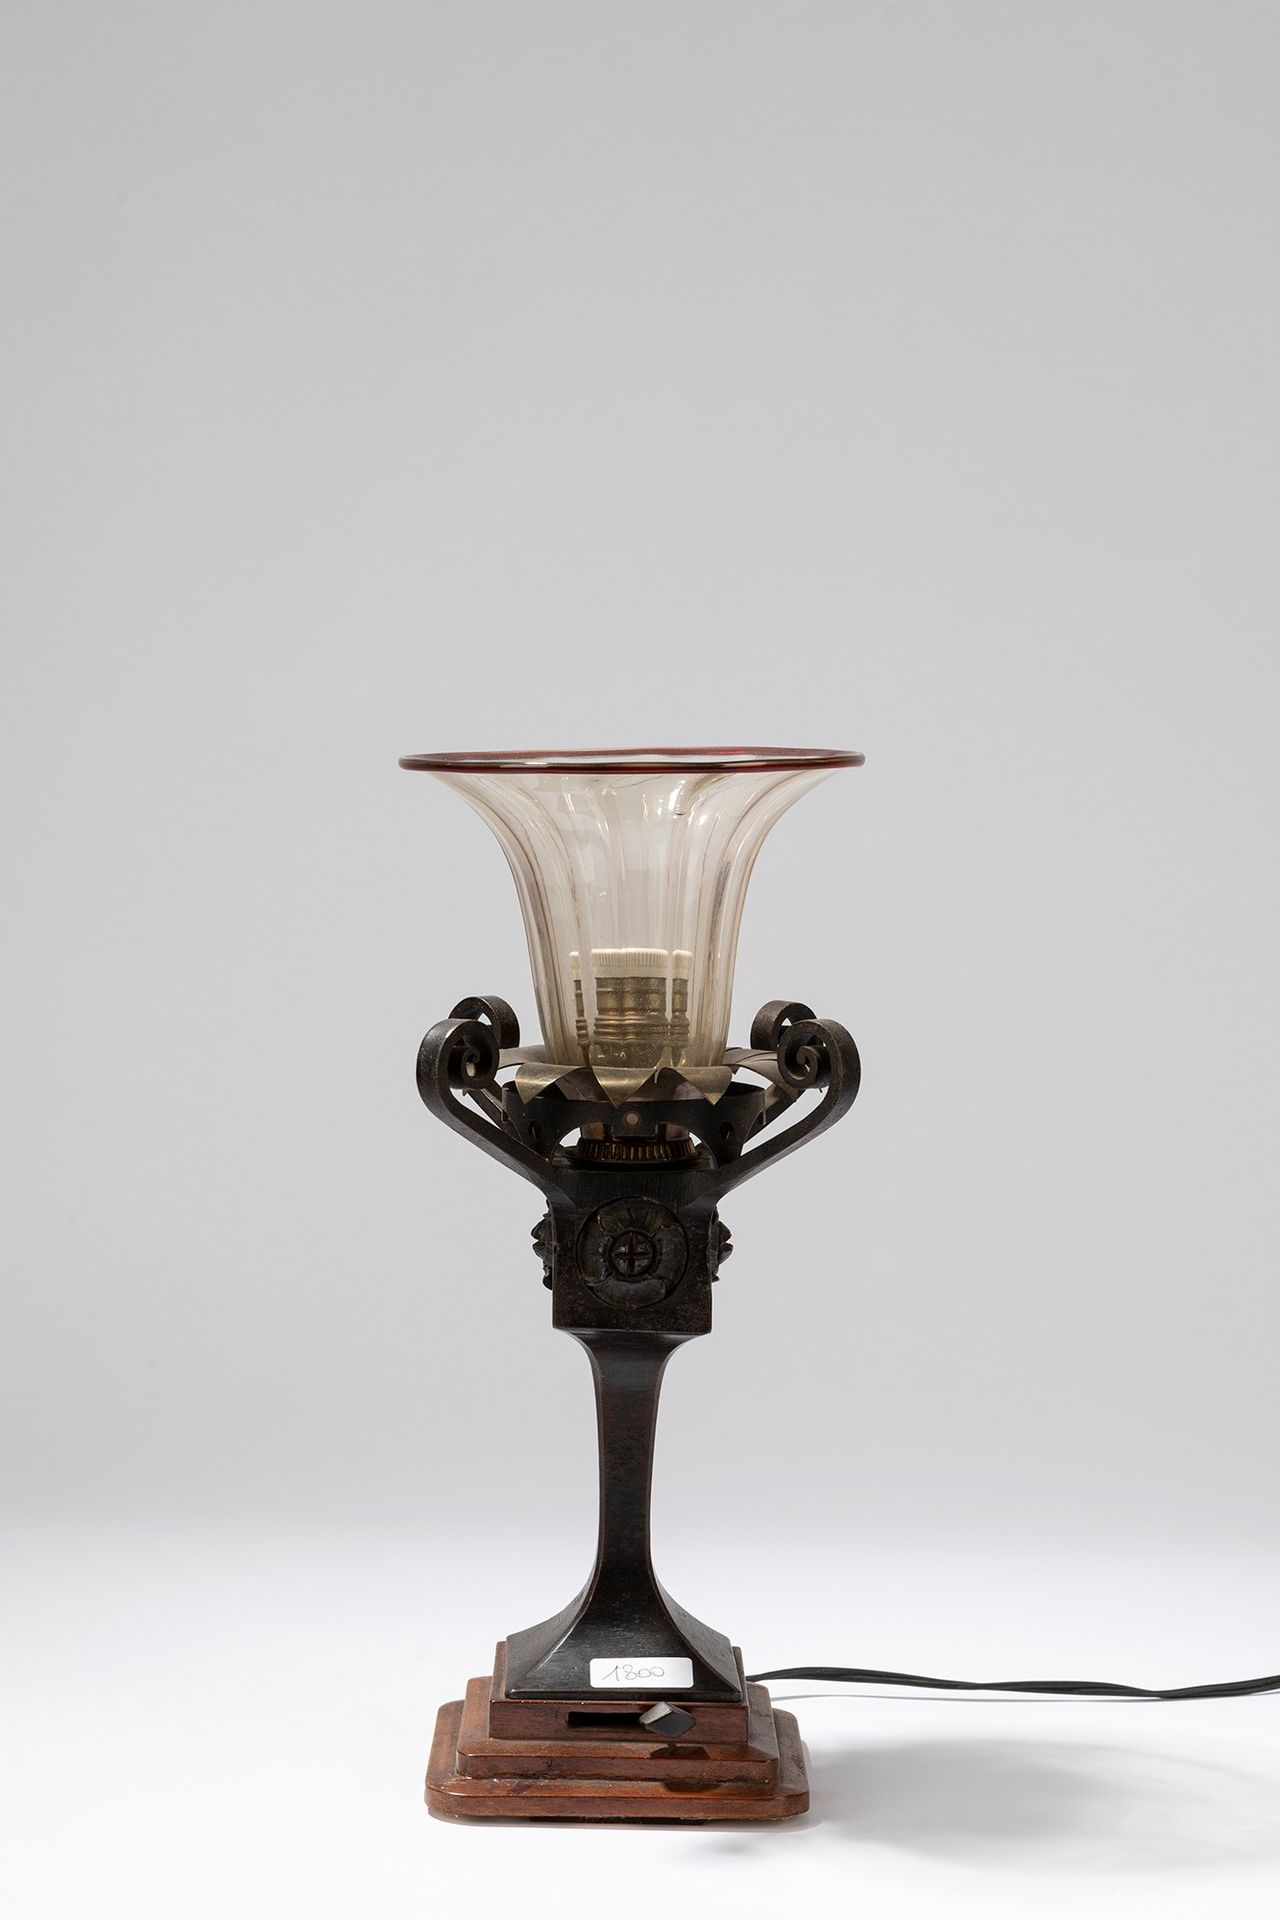 ITALIAN MANUFACTURE Lámpara de mesa, 1920 aprox.

Cm h 36 x 16 x 16
hierro forja&hellip;